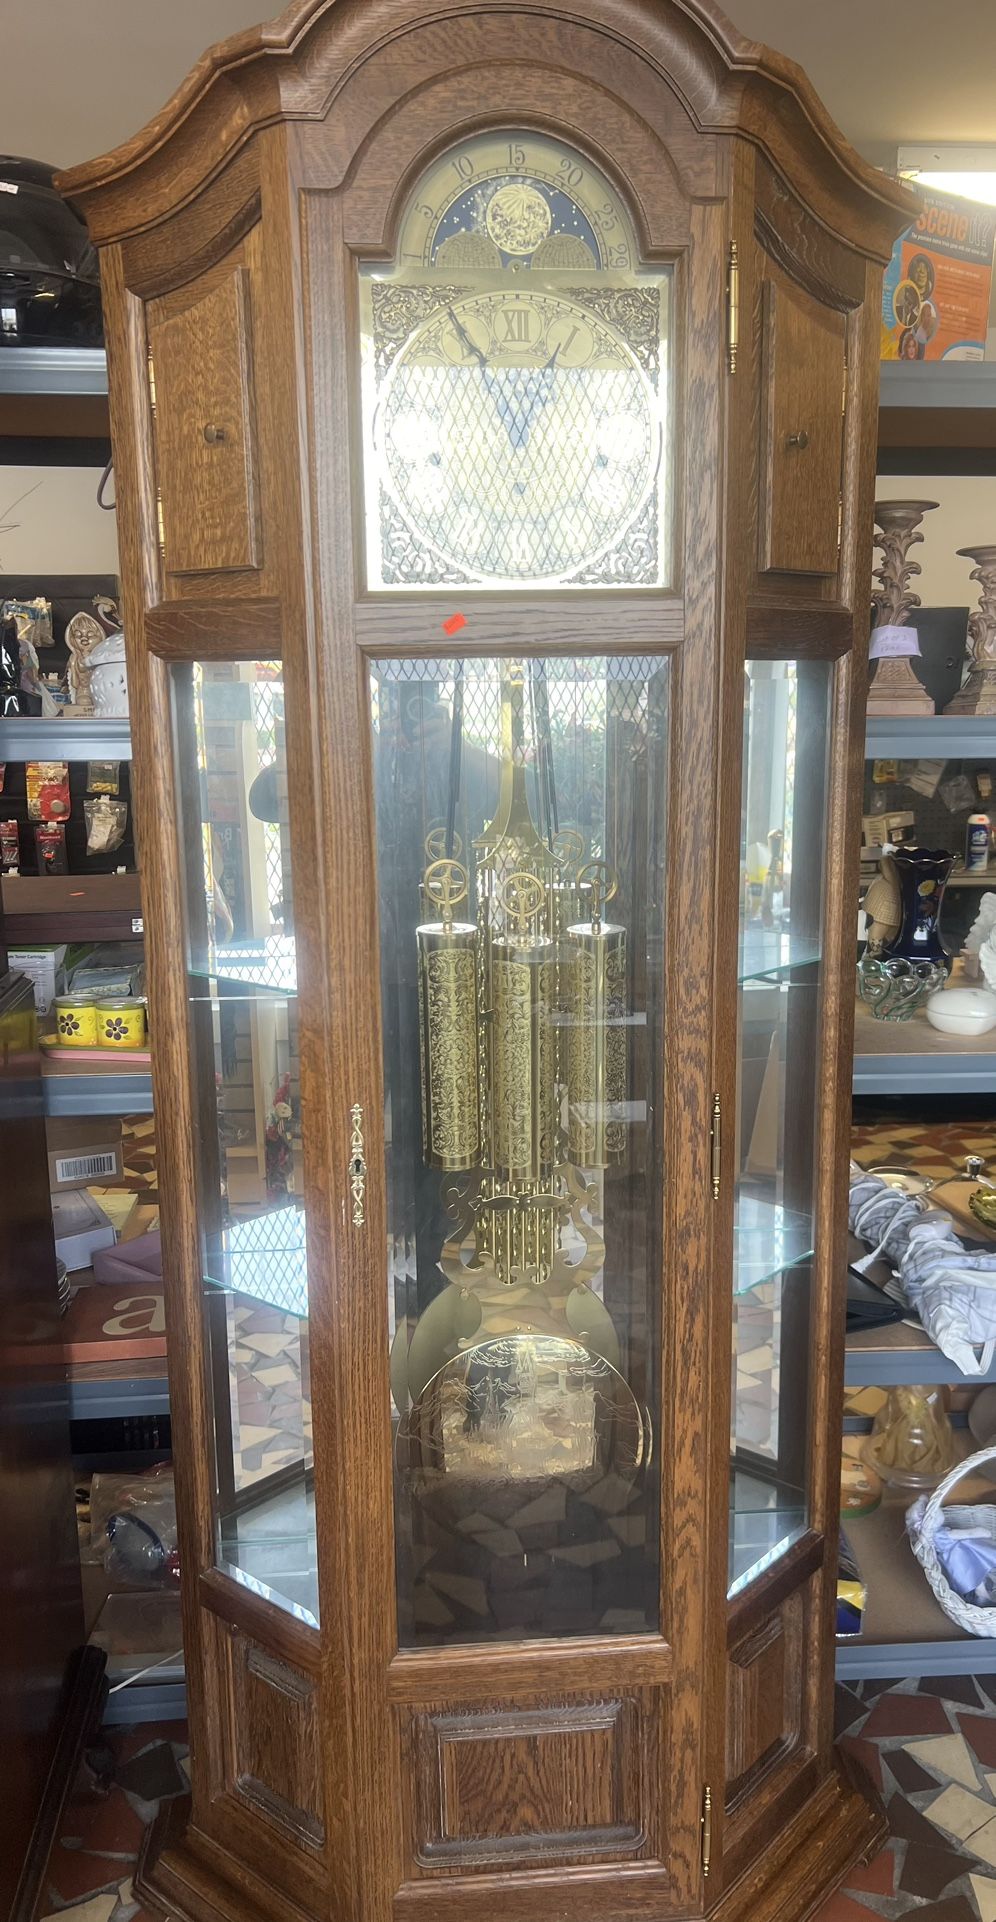 Original Kieninger Grandfather Clock